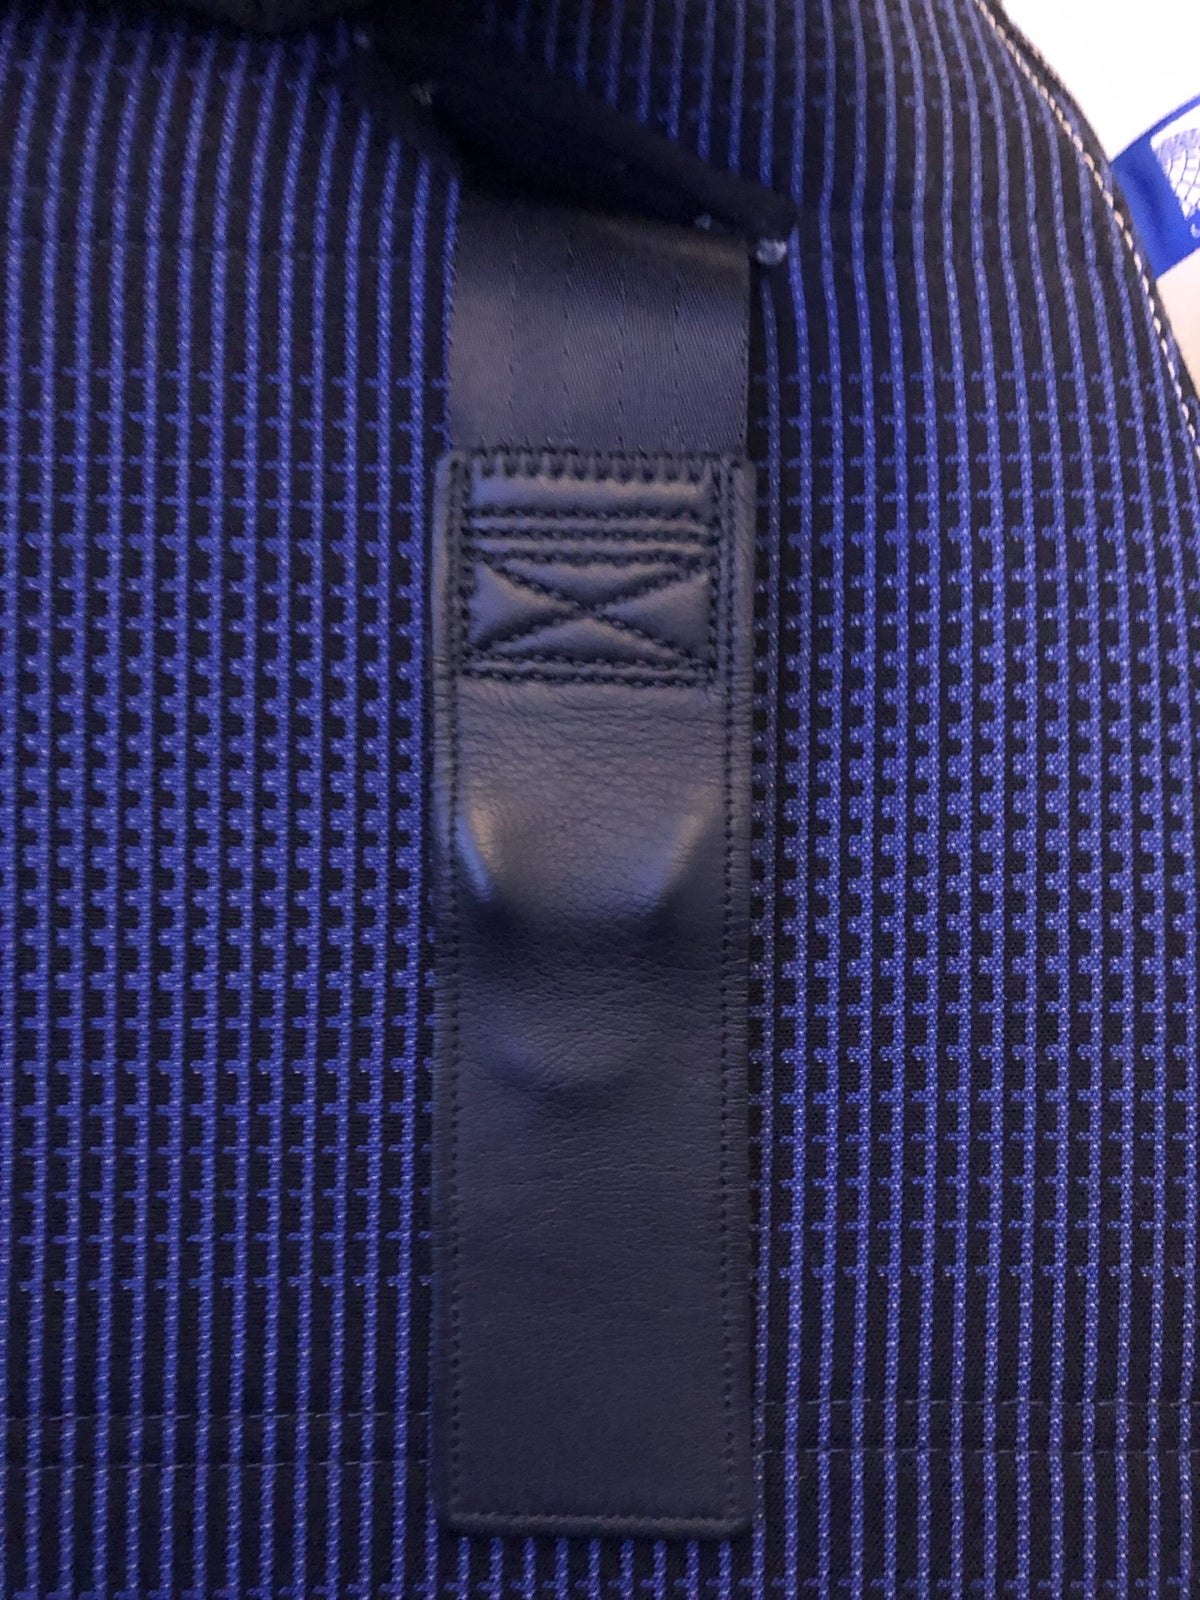 United Polaris 787-10 shoulder strap